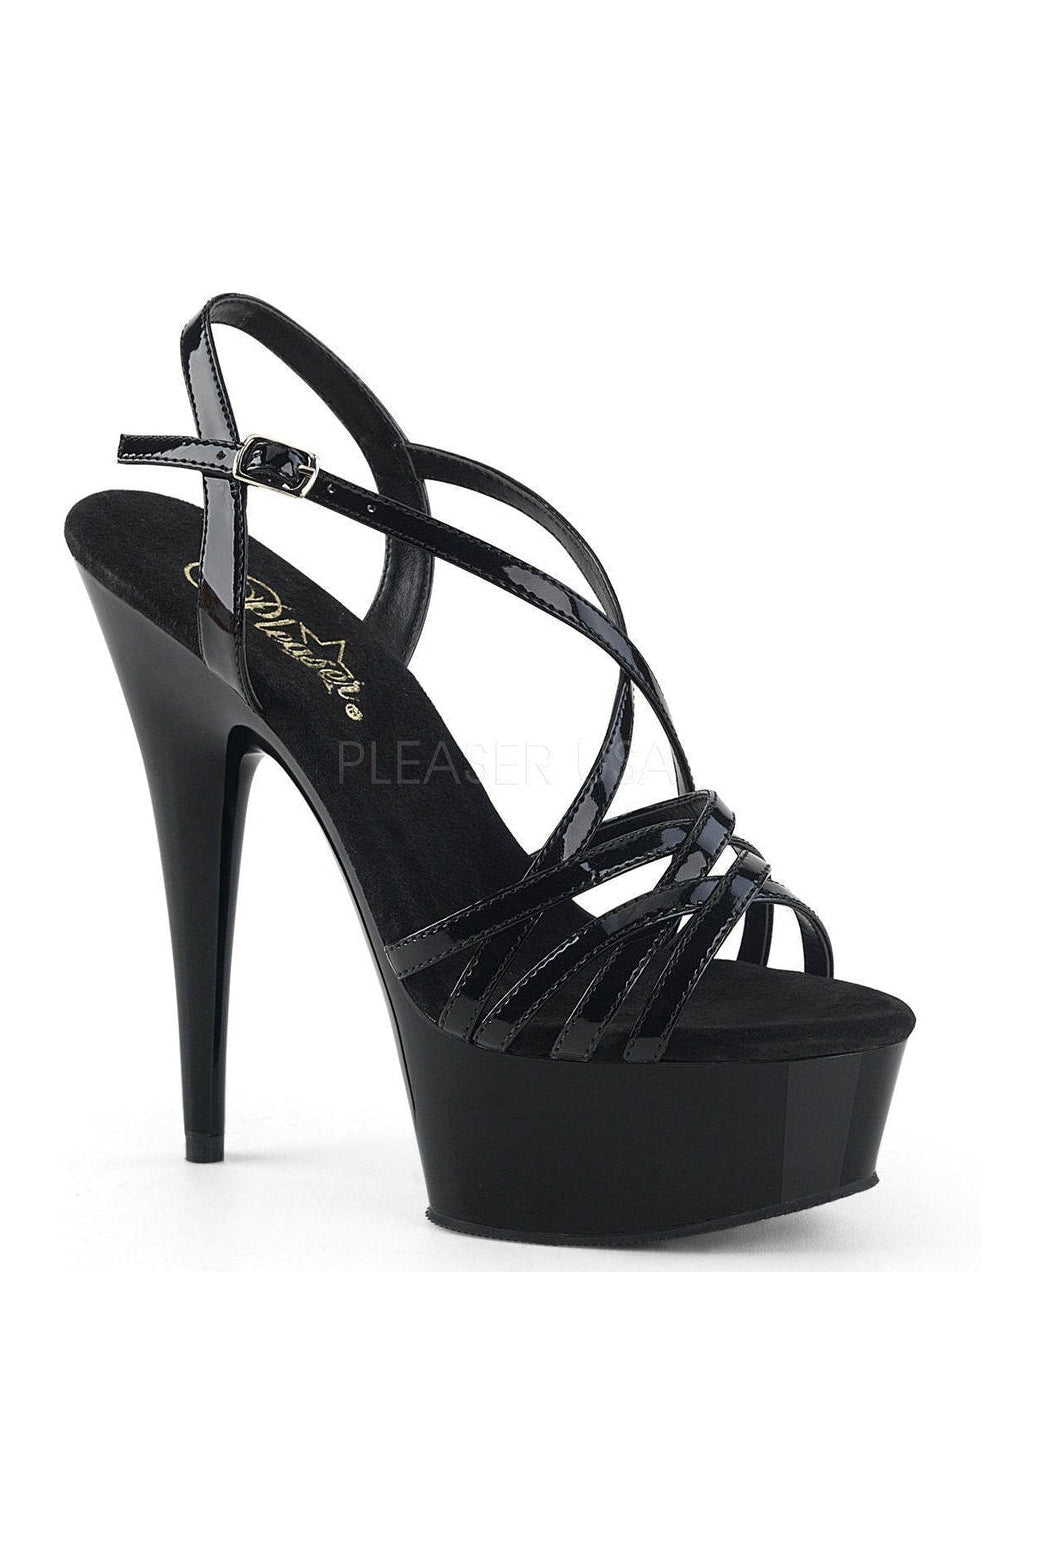 DELIGHT-613 Platform Sandal | Black Patent-Pleaser-Black-Sandals-SEXYSHOES.COM